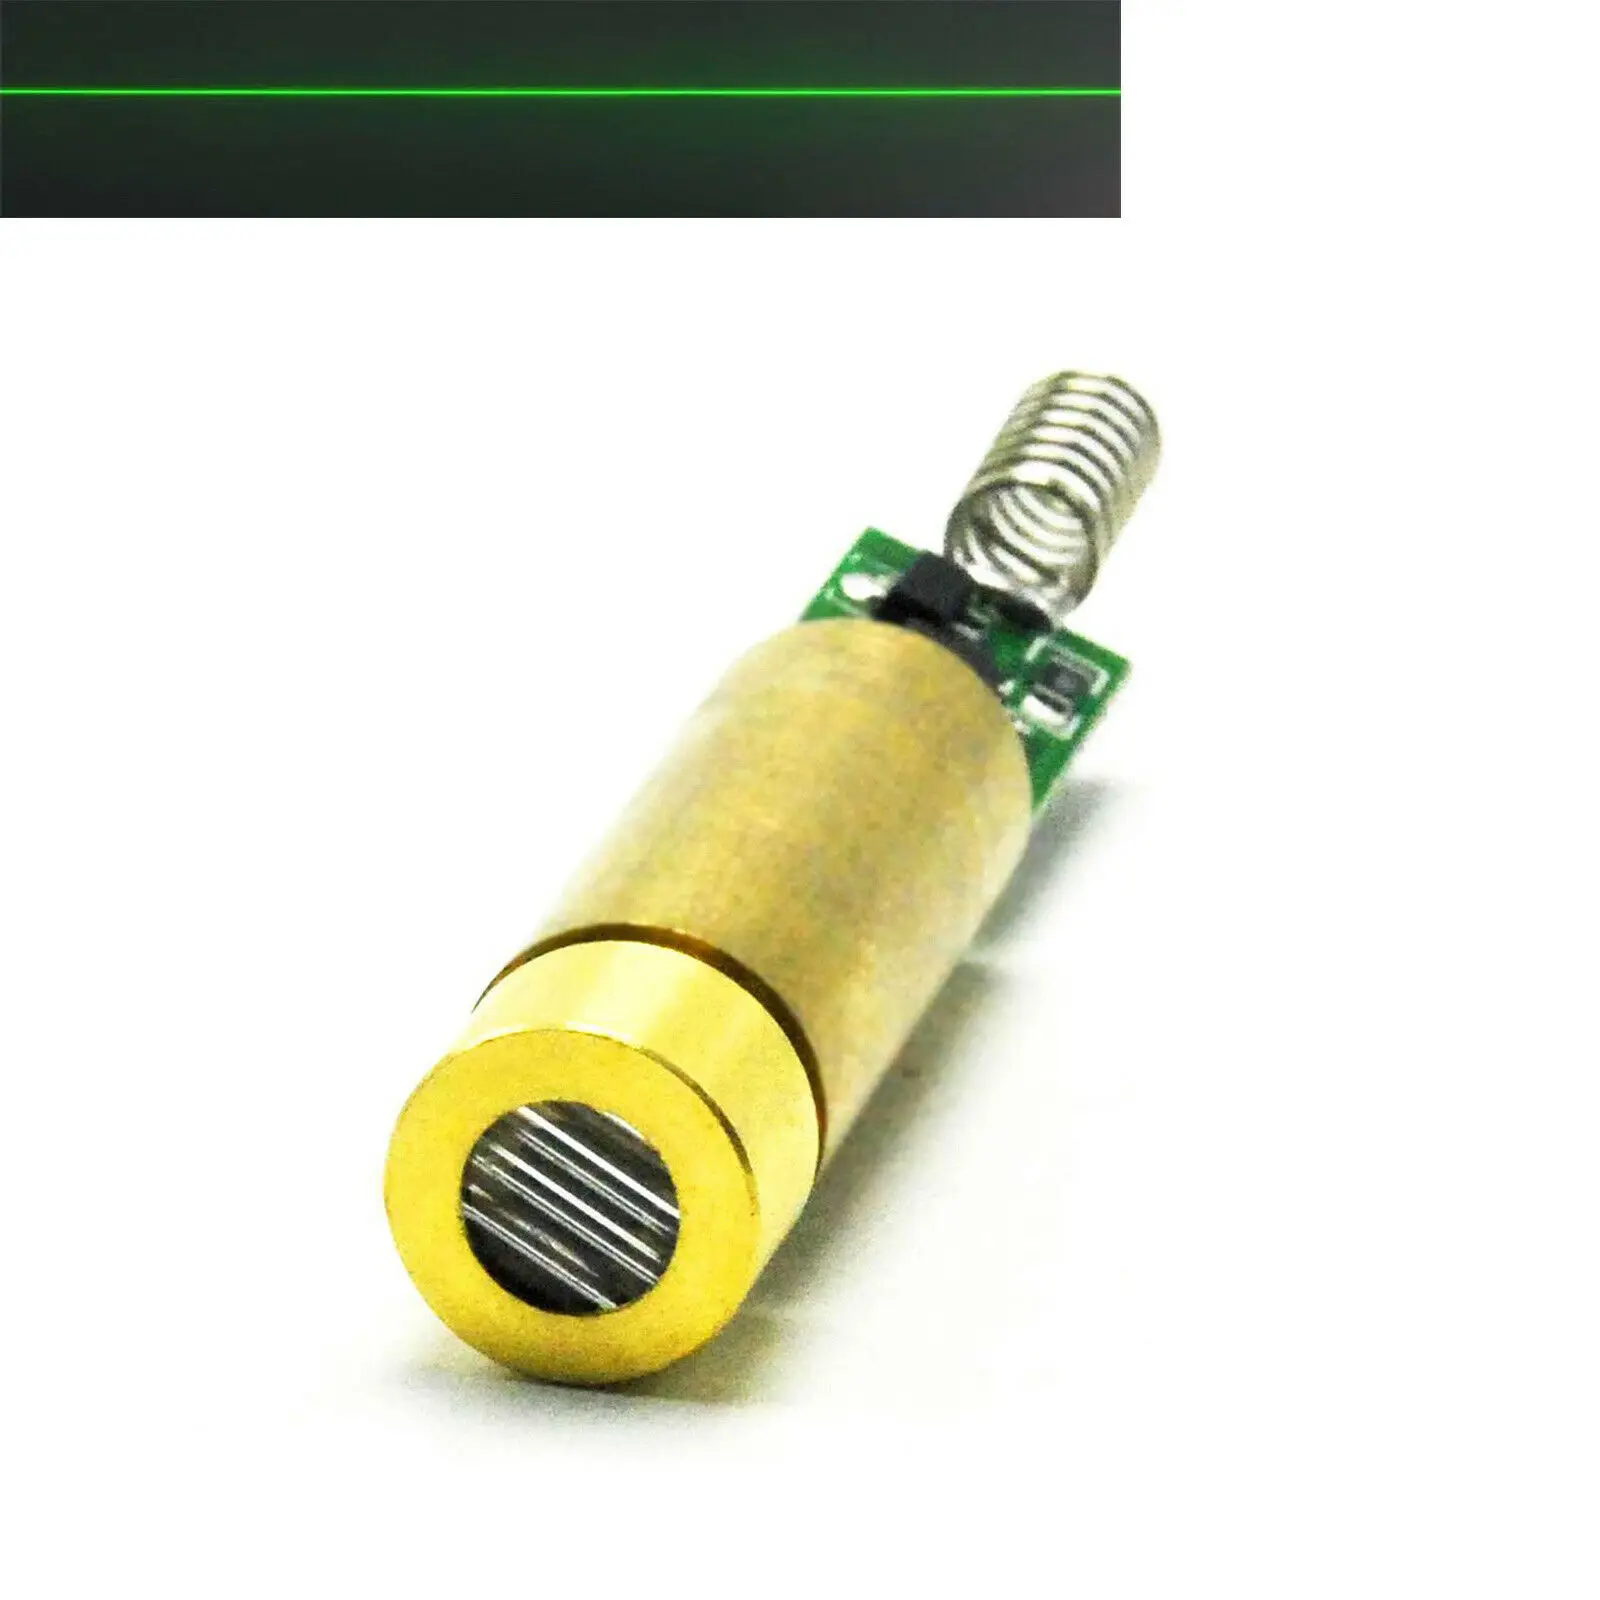 INDUSTRIAL/LAB Brass 532nm 100mW 3.7-4.2V Green Line Diode Laser Module w/Driver